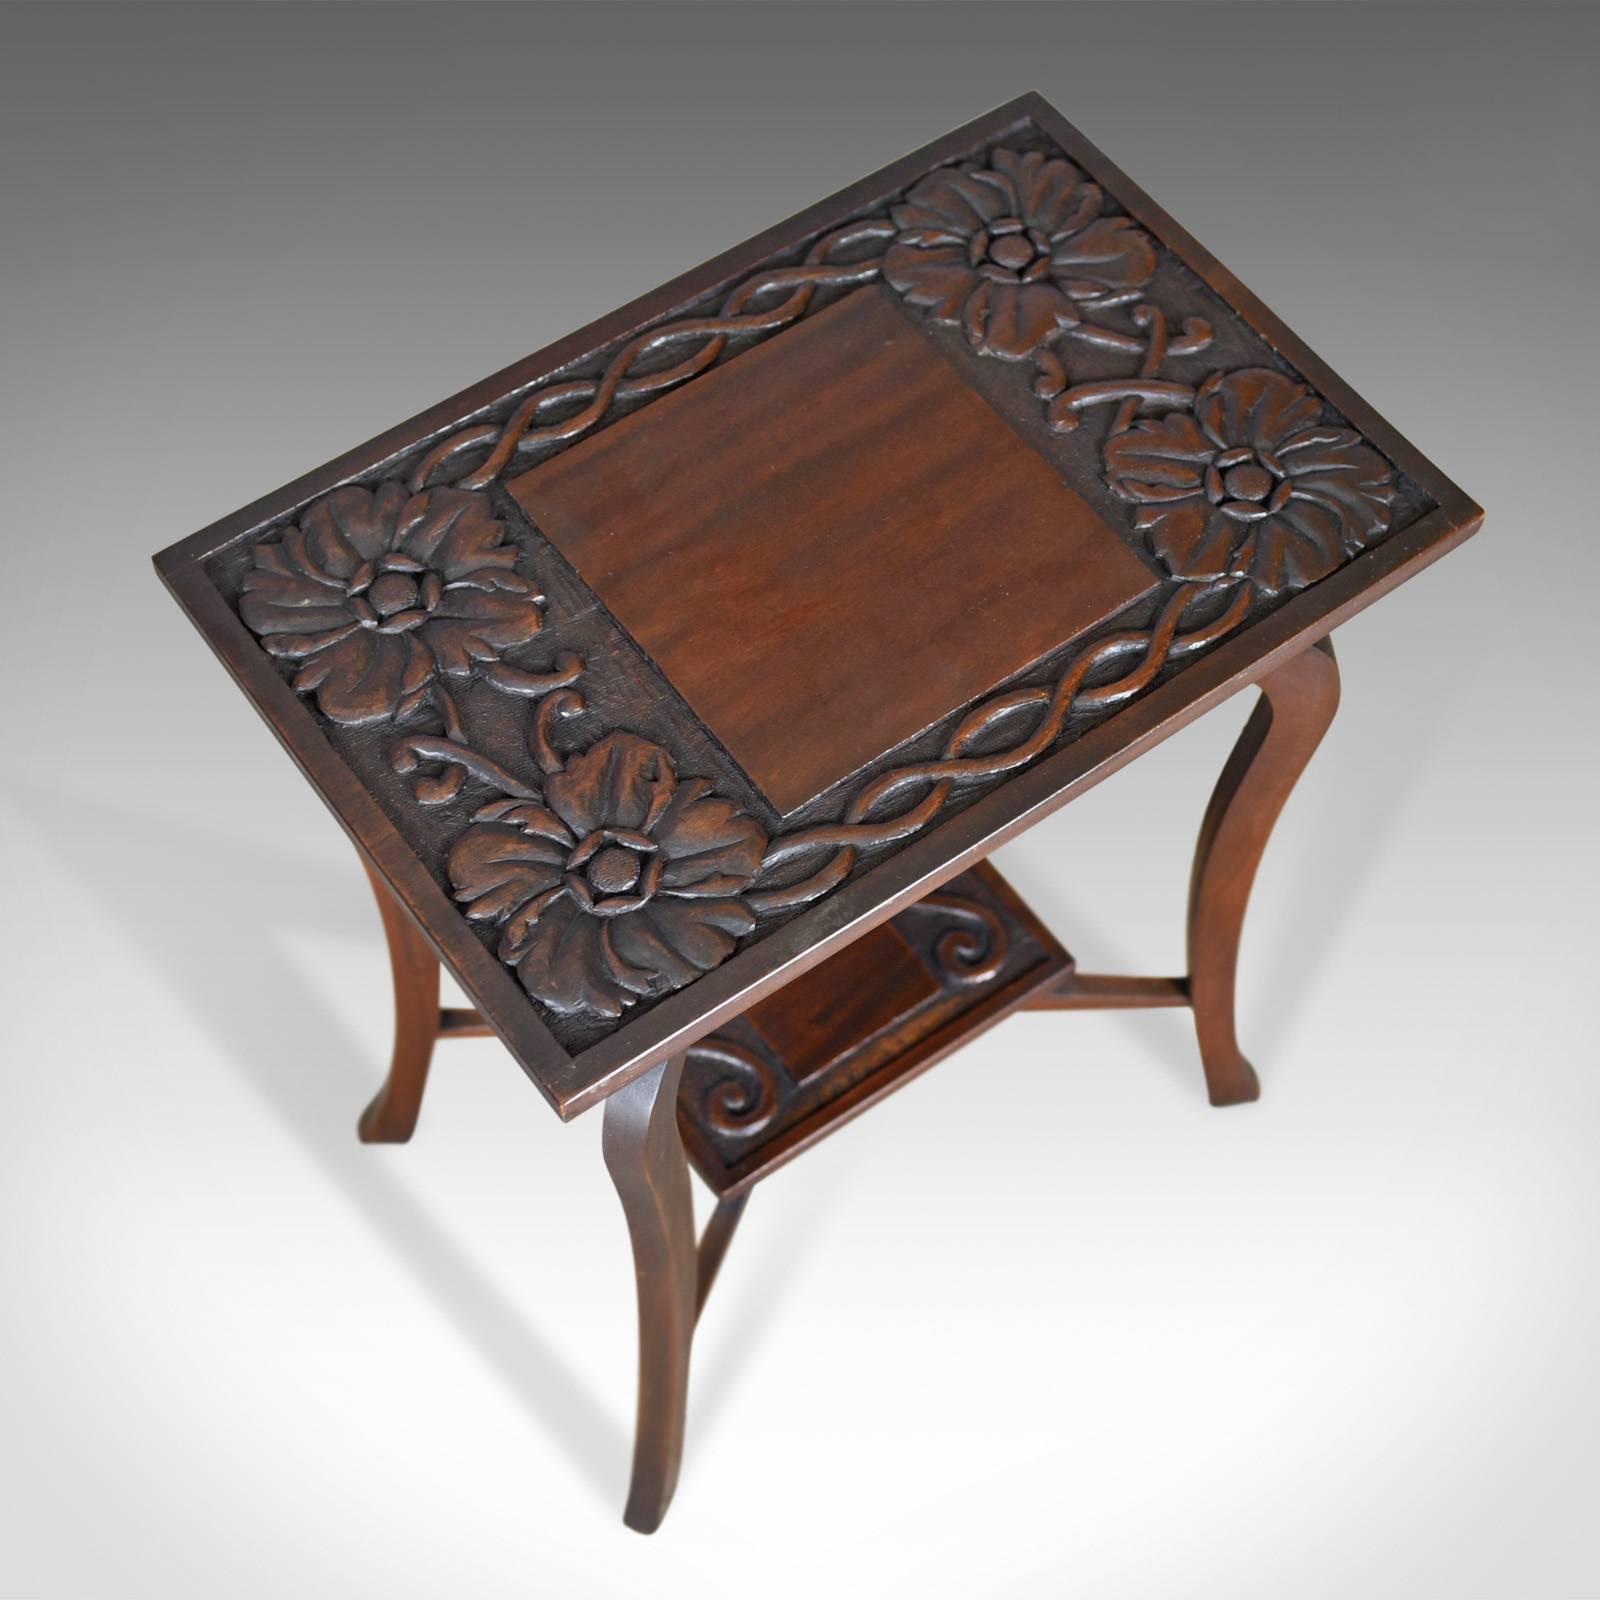 20th Century Antique Side Table, Art Nouveau Overtones, English, Mahogany, circa 1900